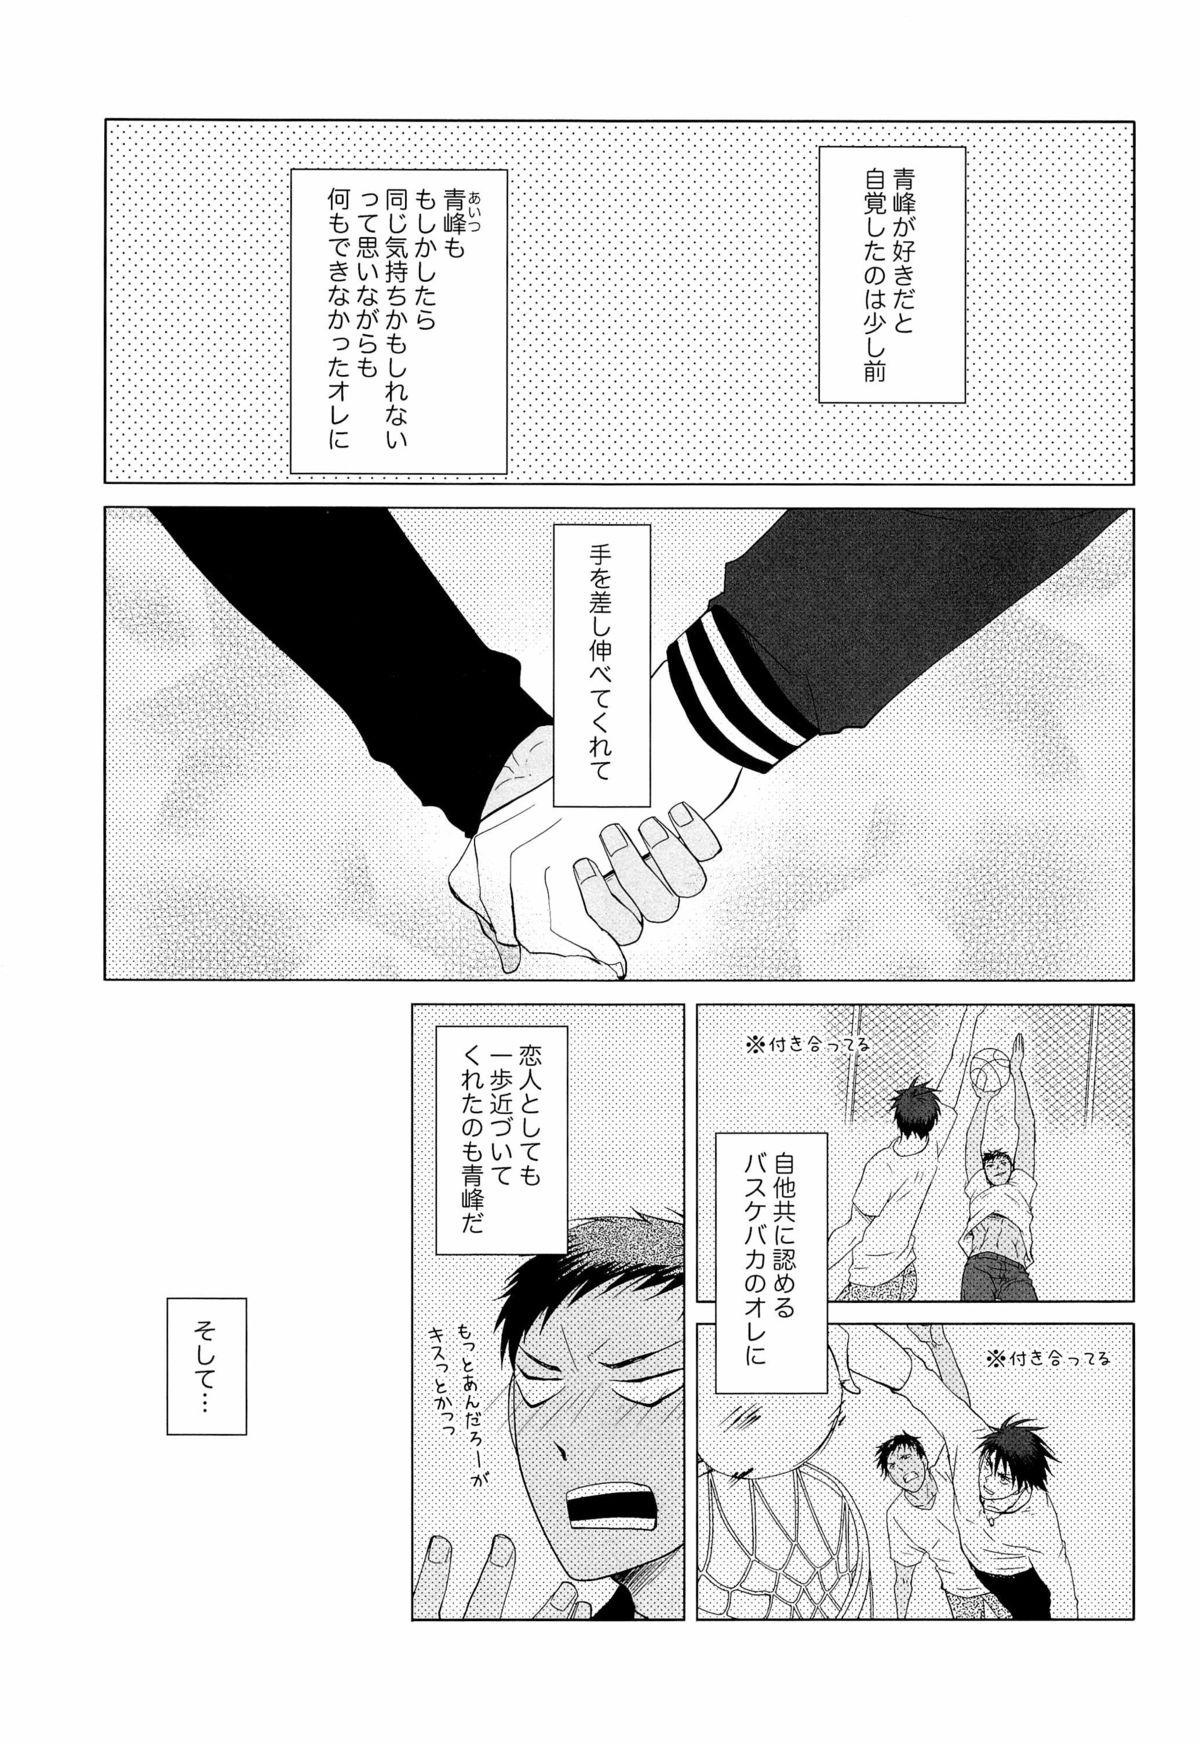 Sentando あおみねと付き合ってる、ます。 - Kuroko no basuke Full - Page 5